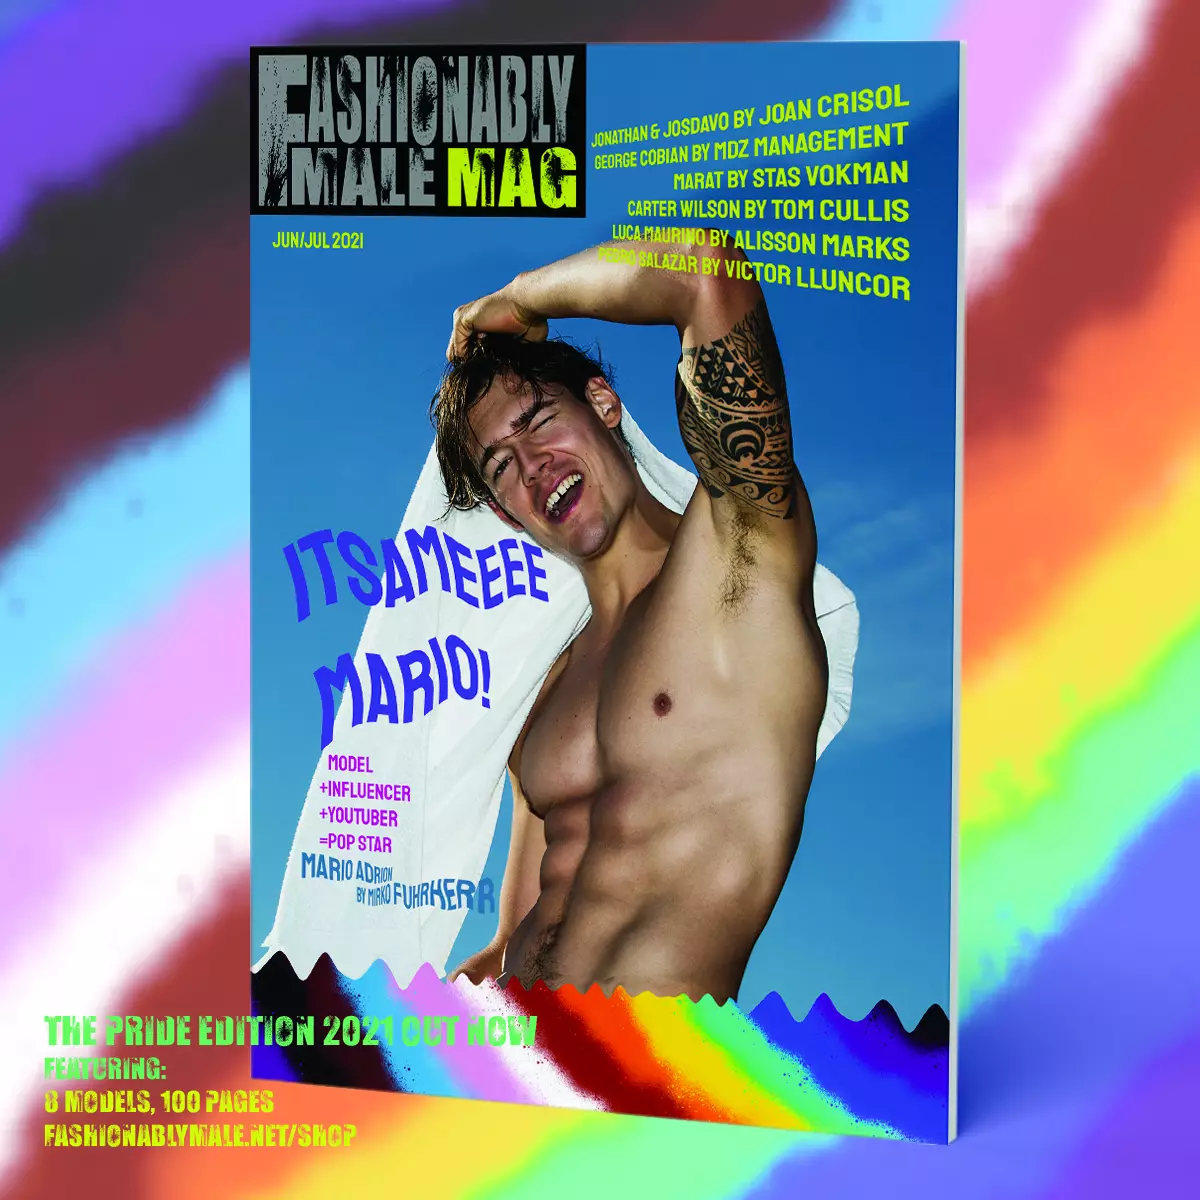 Mario Adrion Fashionably Male Mag Pride Edition 2021-ის ქავერ პროდუქტისთვის